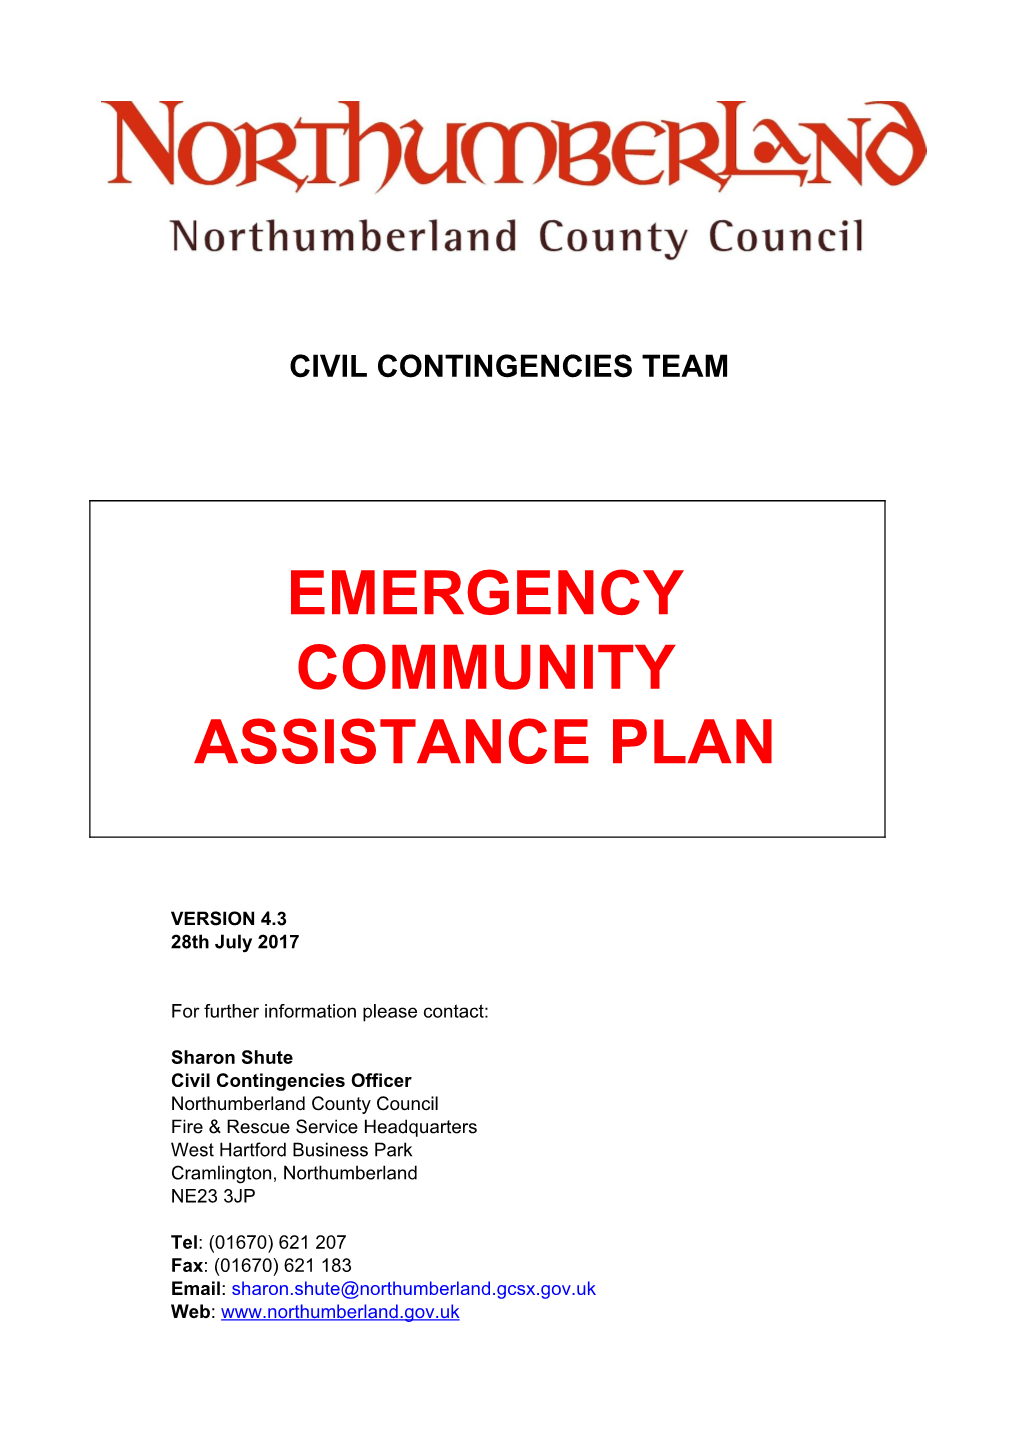 Emergency Community Assistance Plan